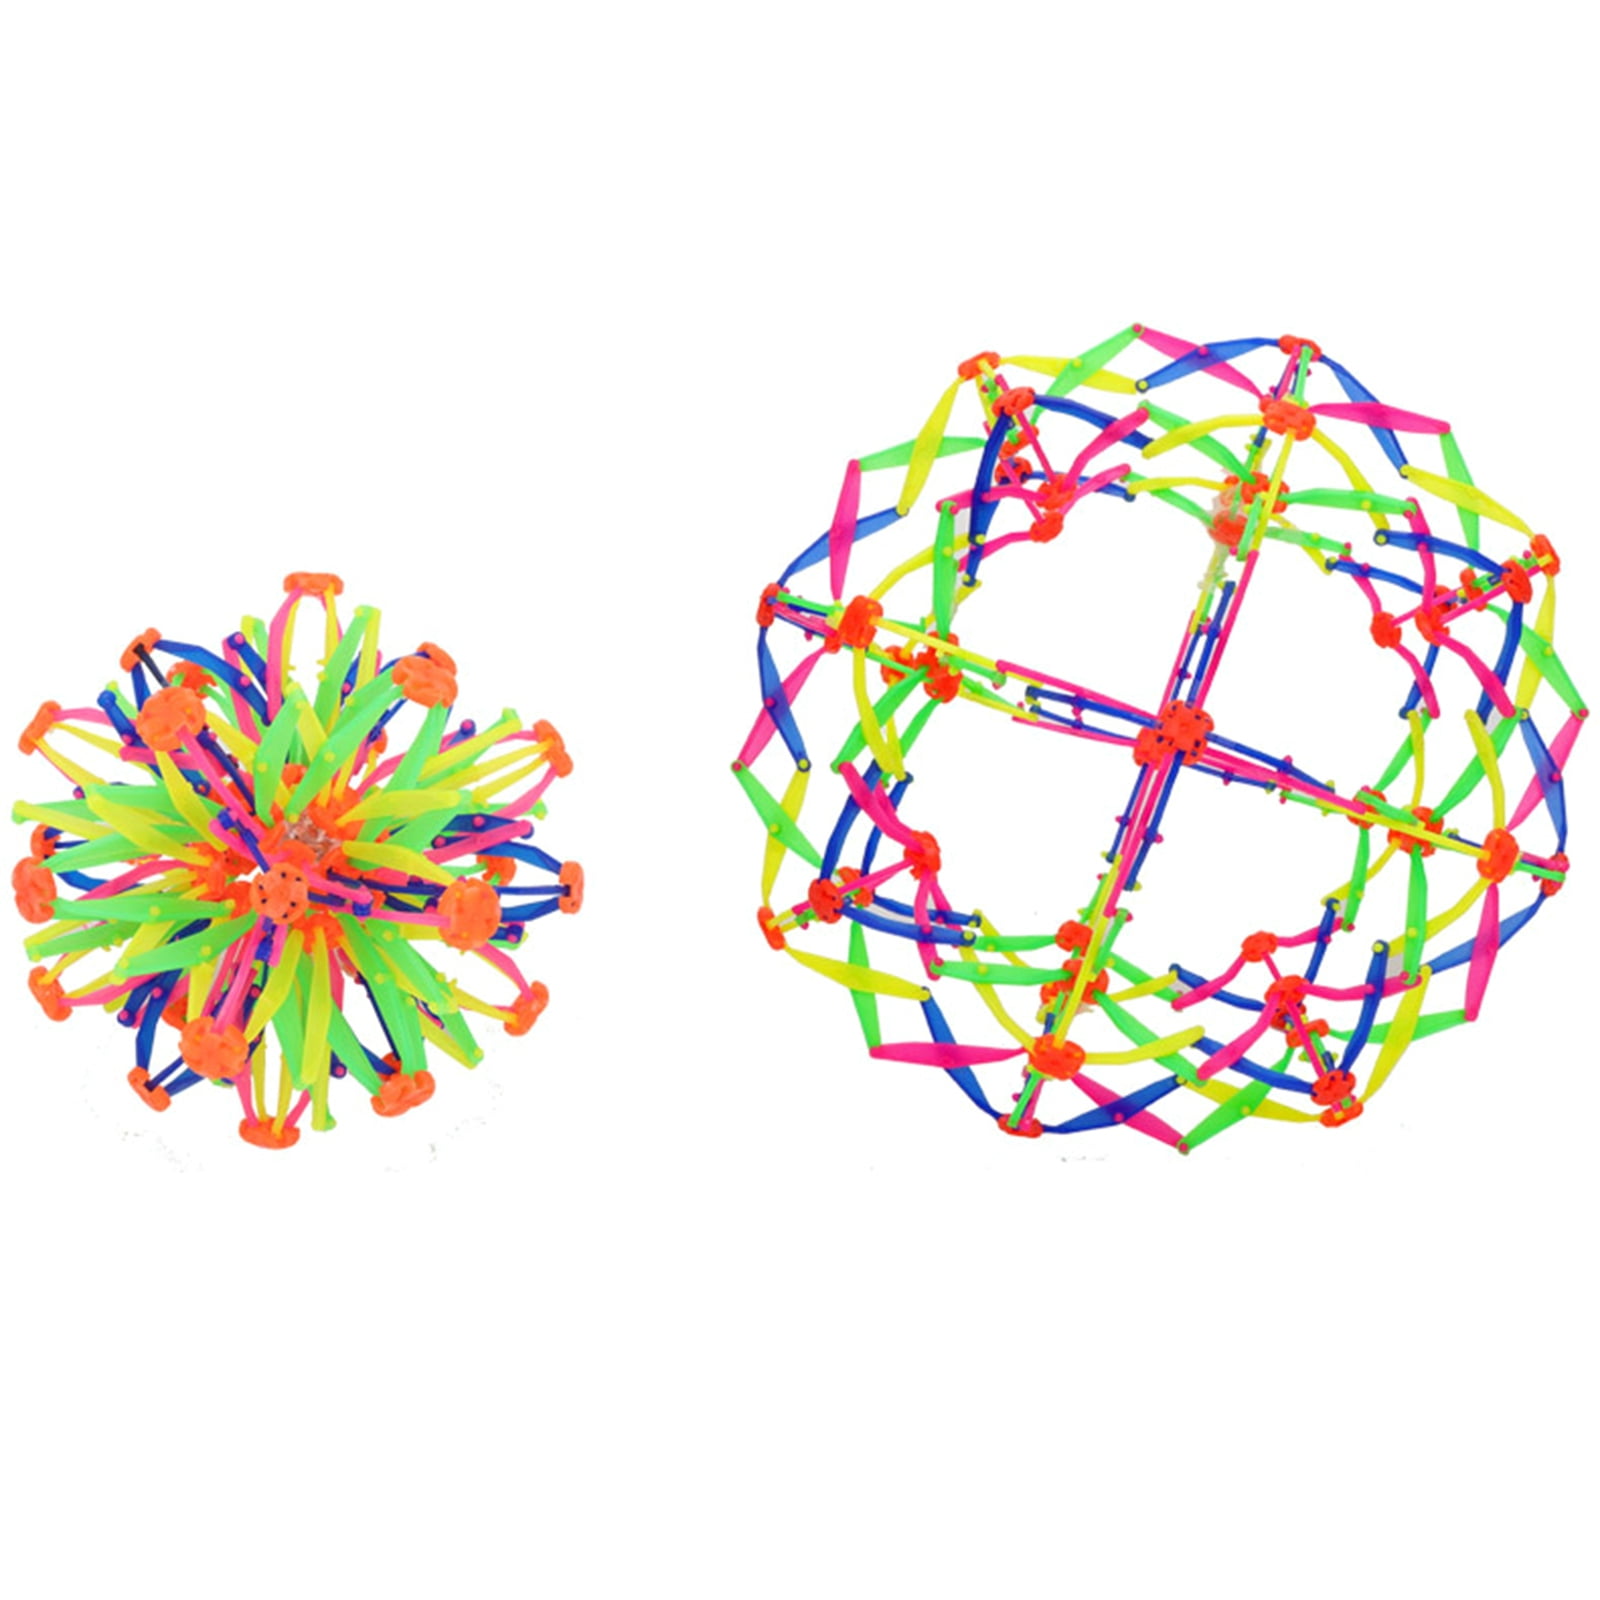 Tobar Expandball Spherical Colourful Thrown Fun Novelty Children Toy Plastic 